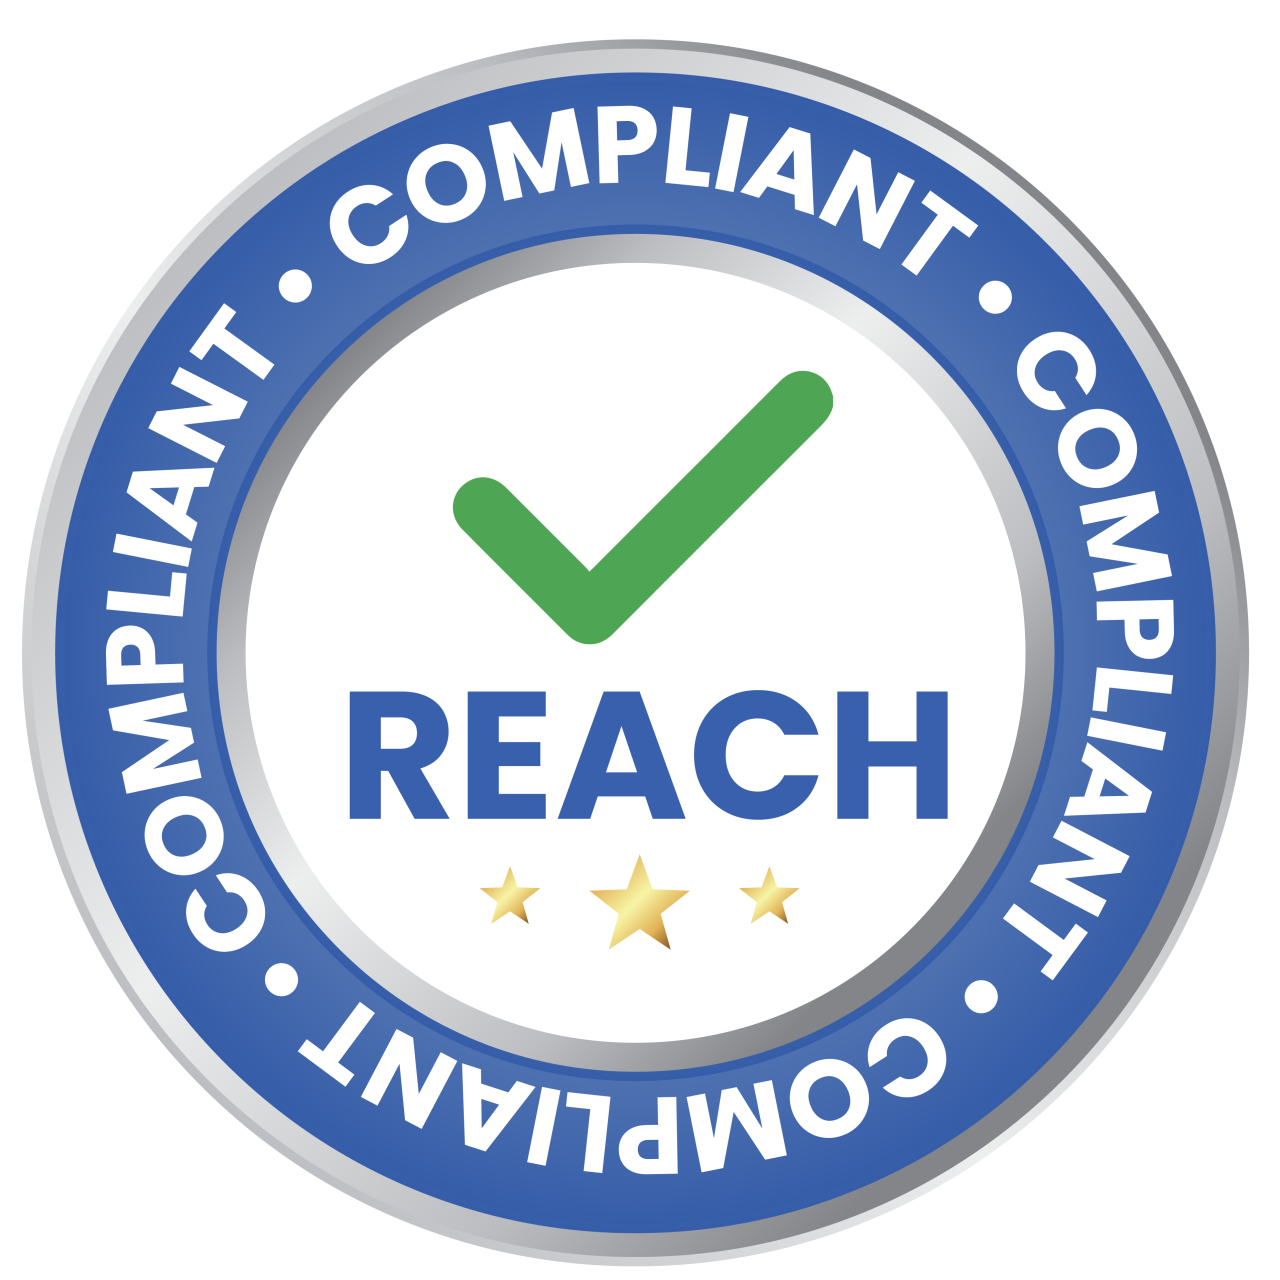 Reach certification status